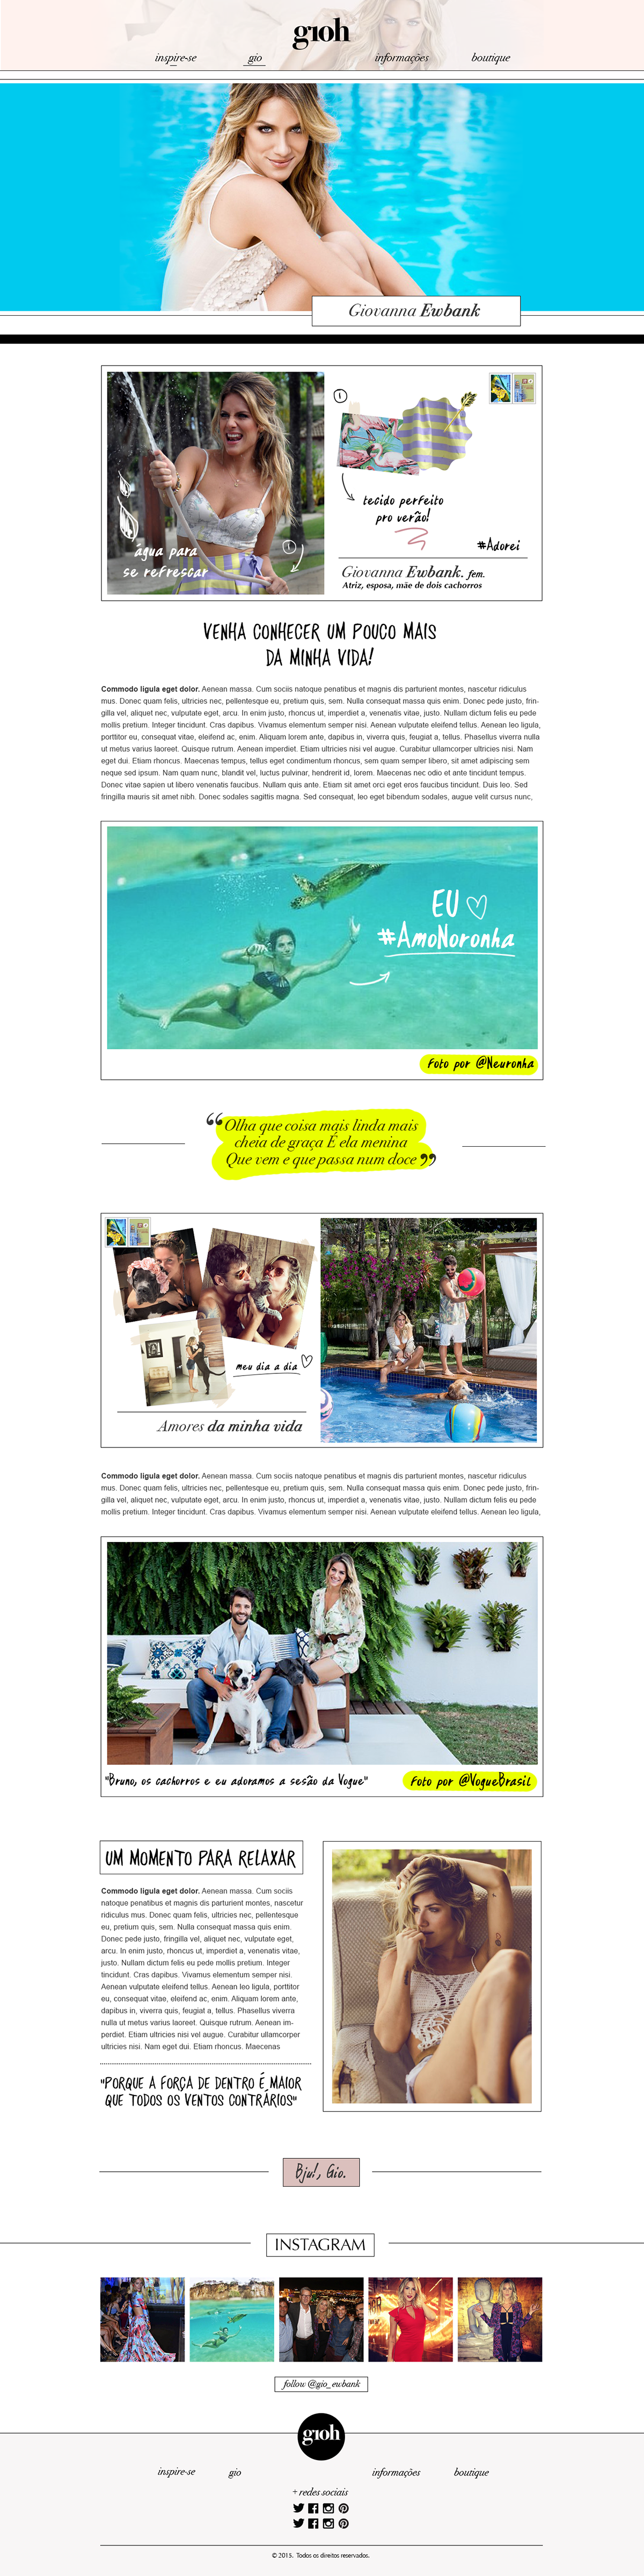 gioh giovanna ewbank Brasil model Blog recife